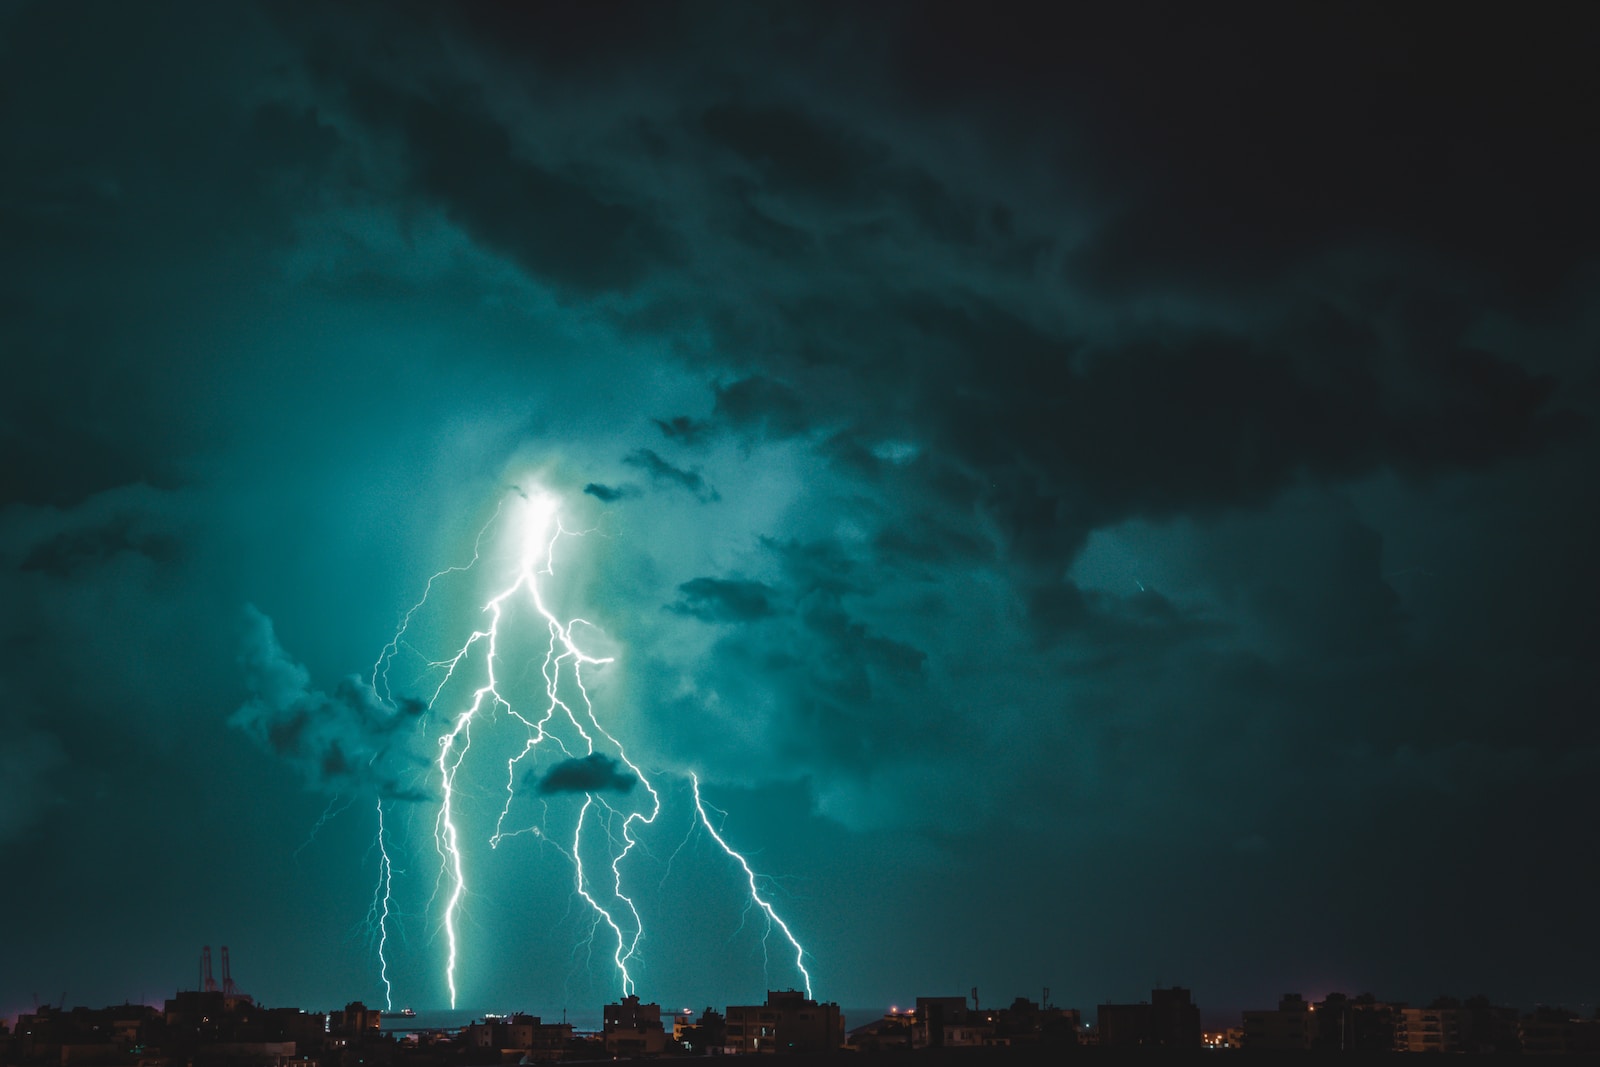 a lightning bolt striking over a city at night